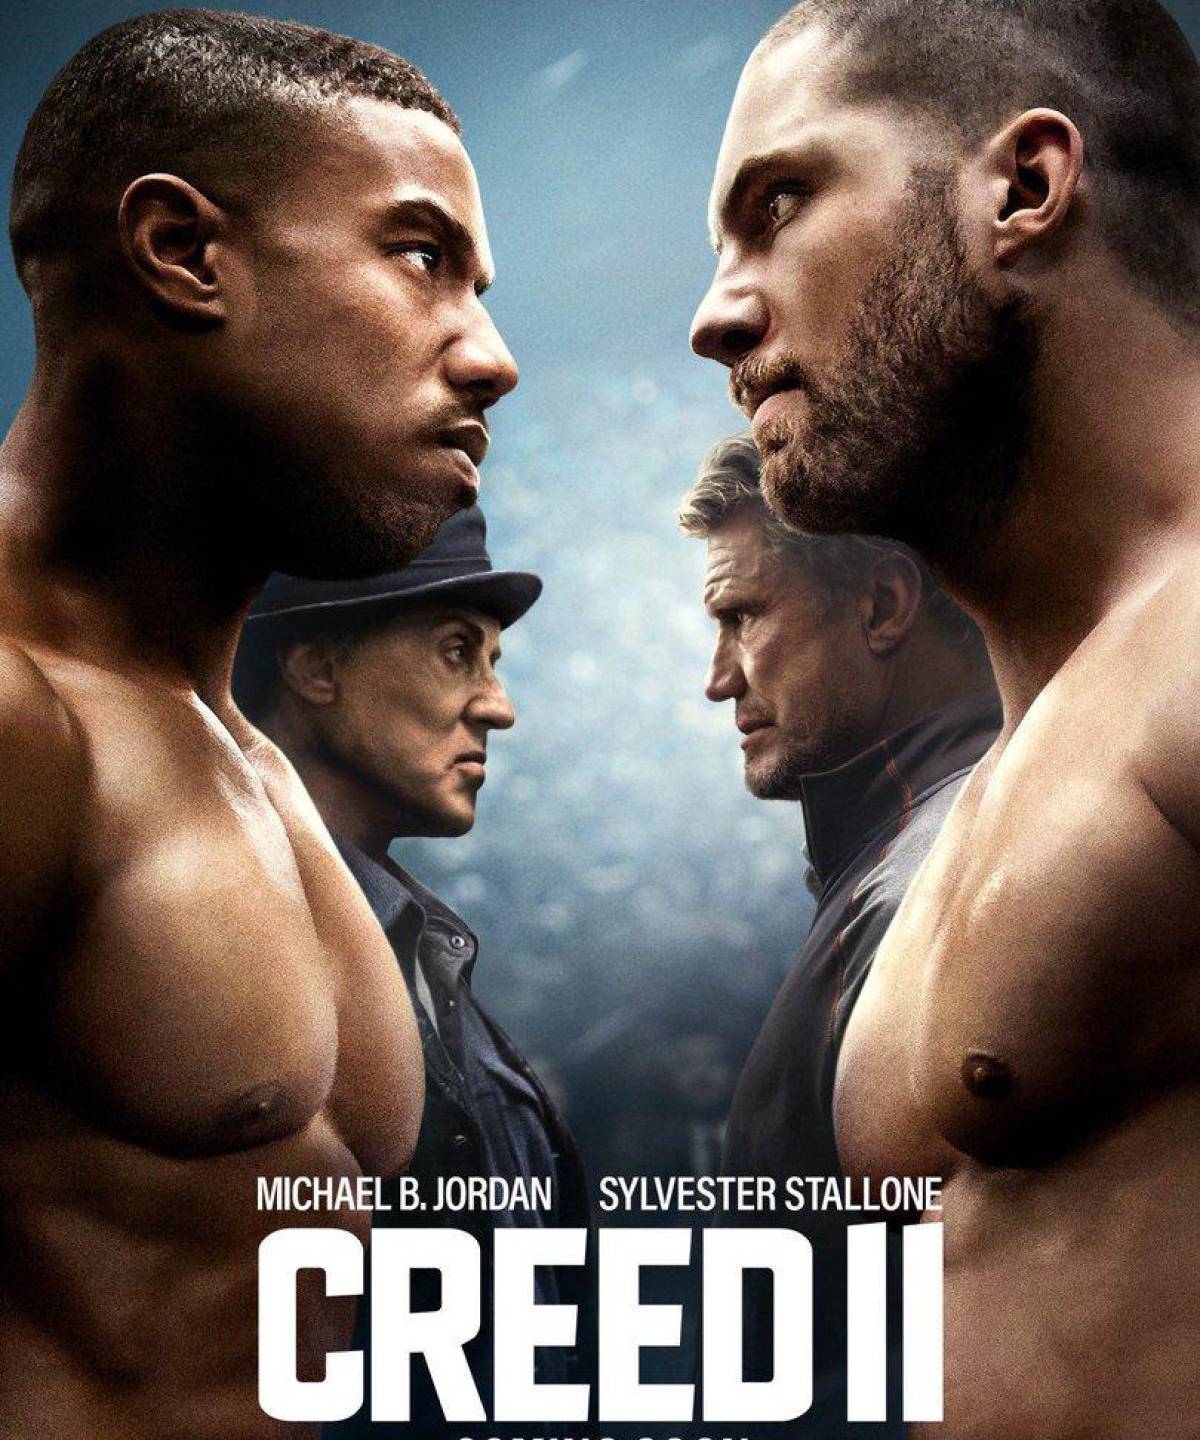 Creed II (Steven Caple Jr.)